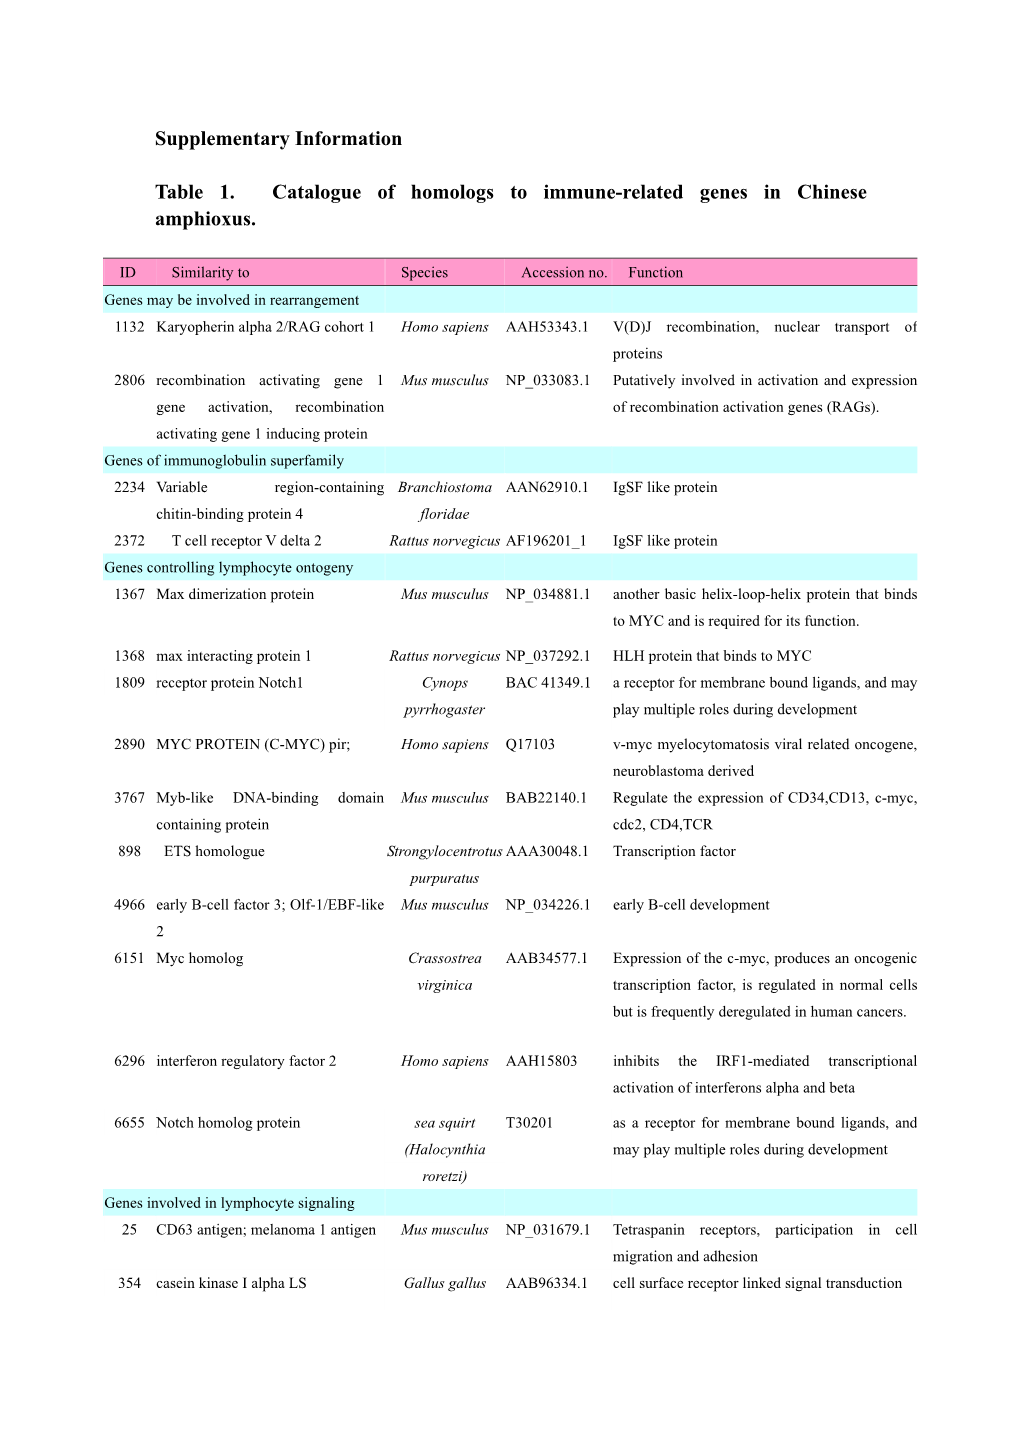 Supplemental Table (PDF File, 156Kb)